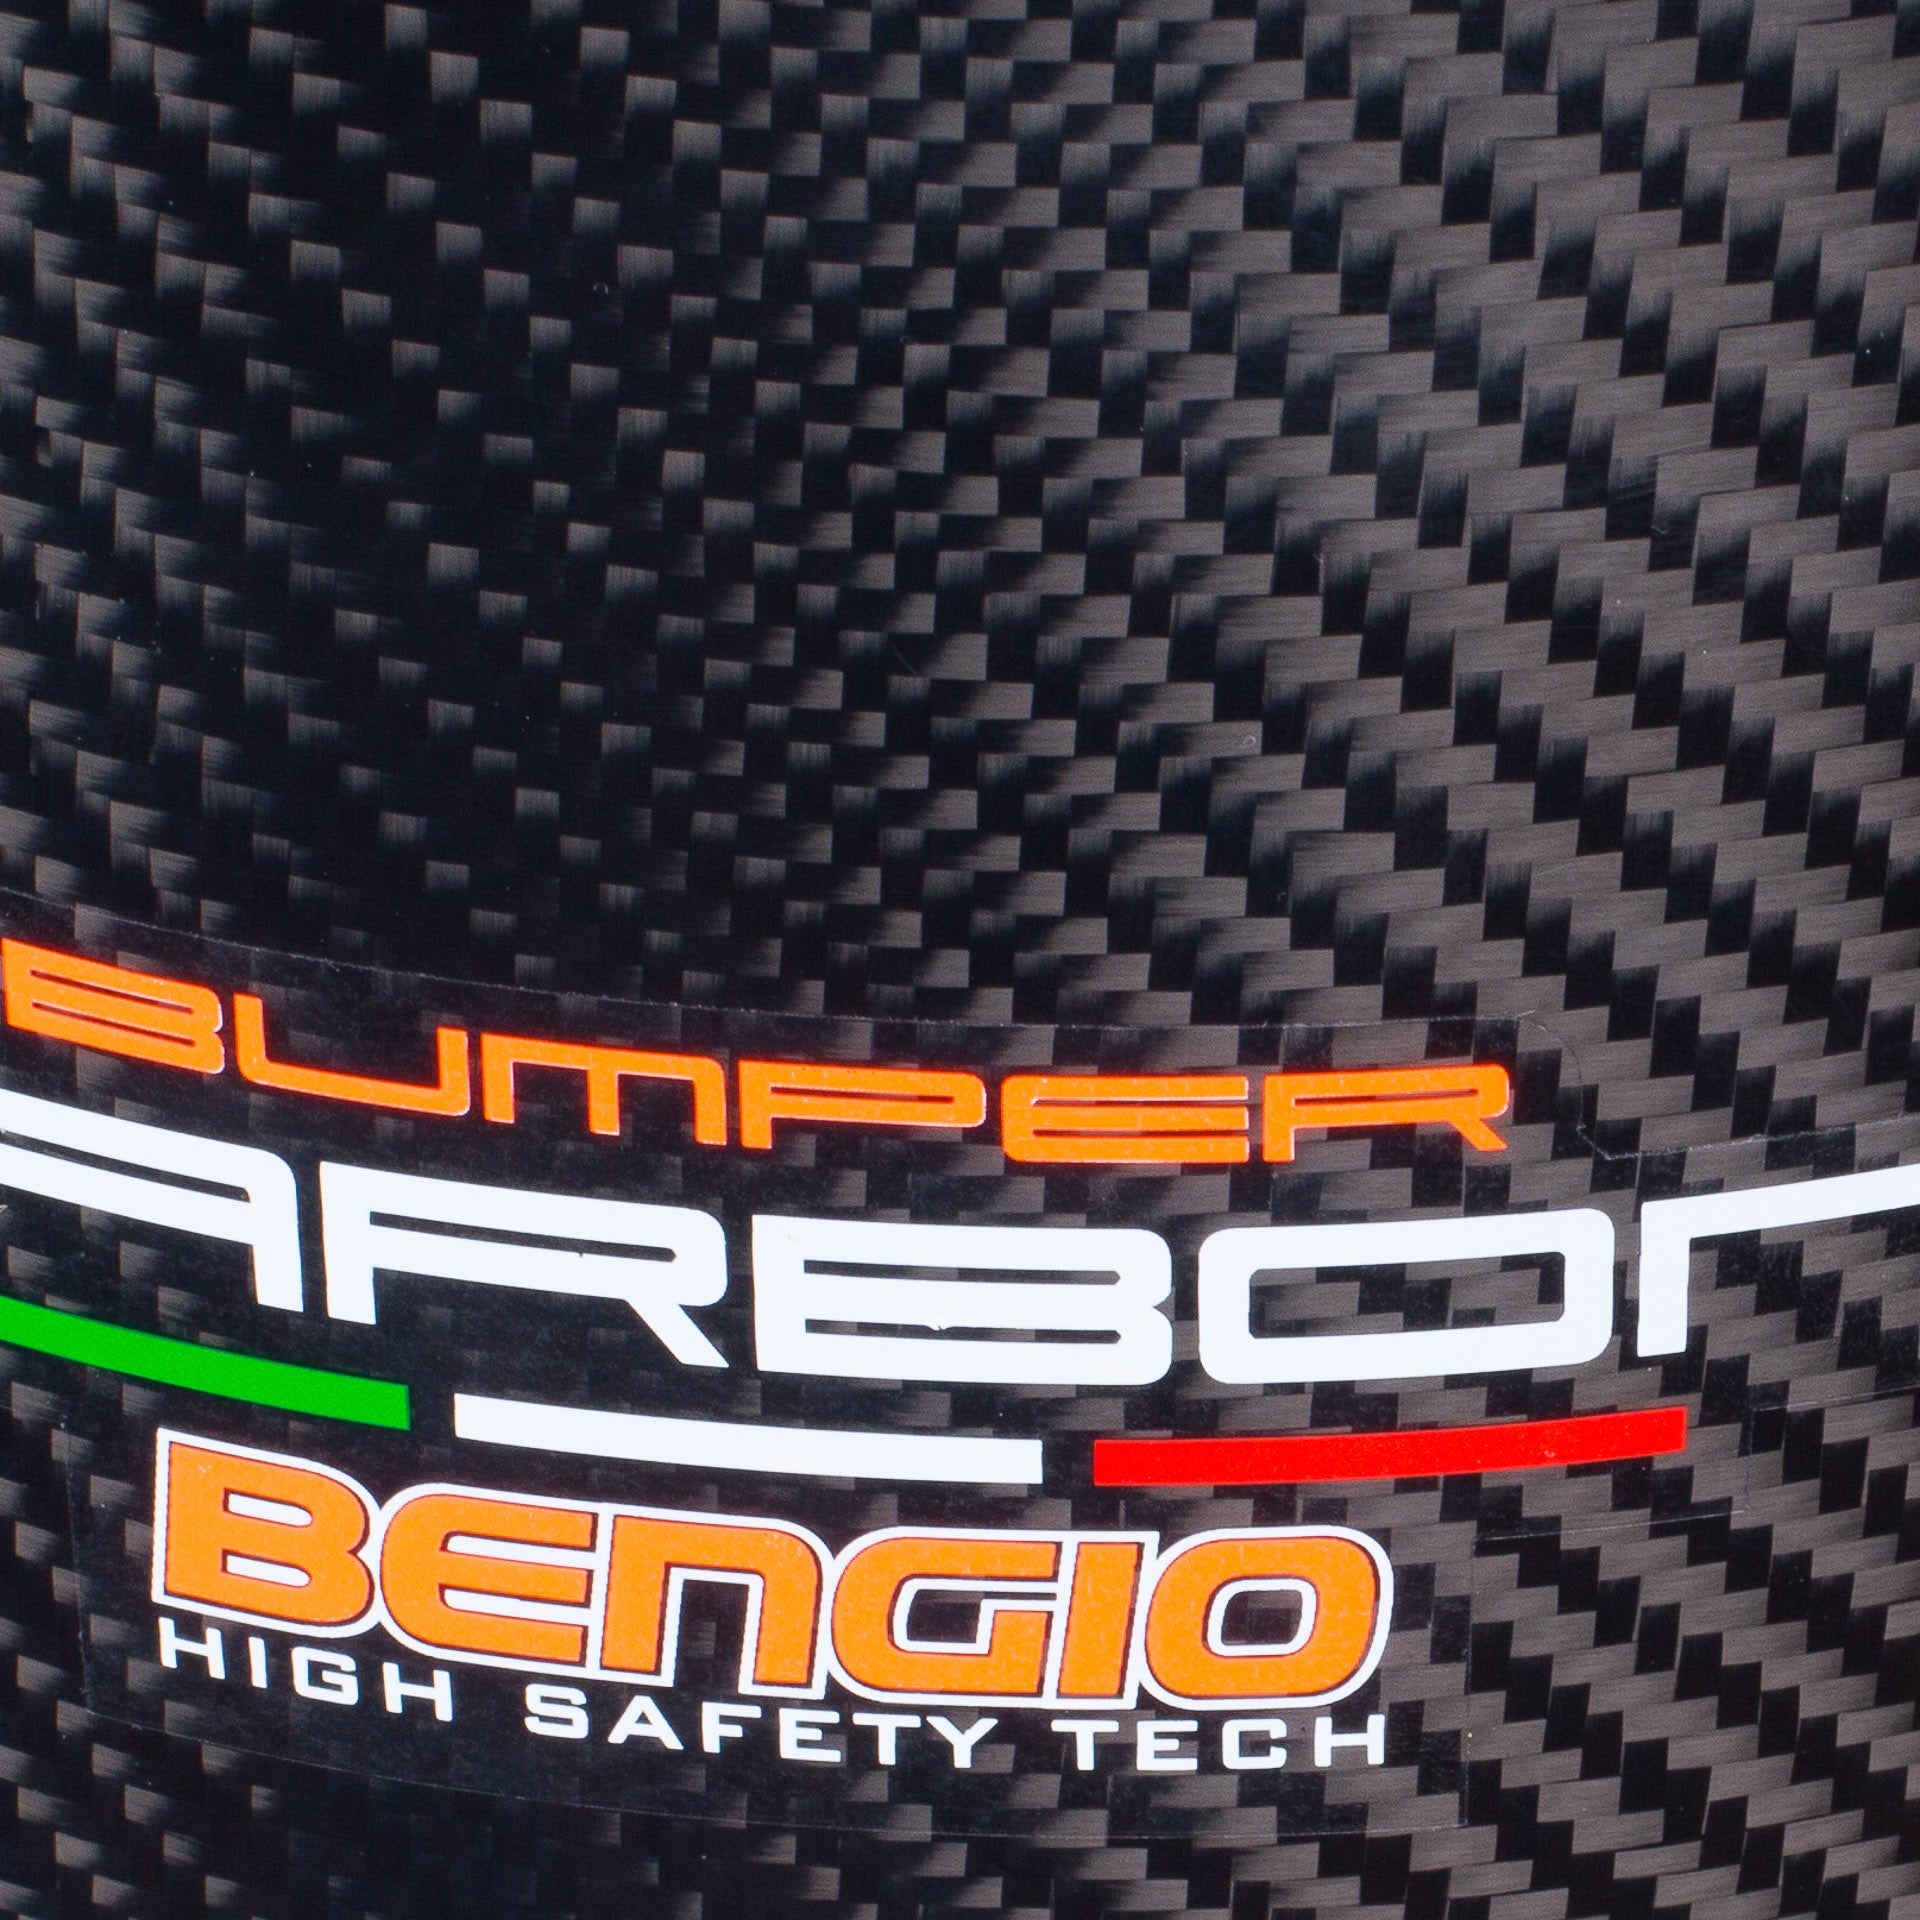 BENGIO CRBS BUMPER Carbon Захист ребер для картингу, карбон, розмір S Photo-6 